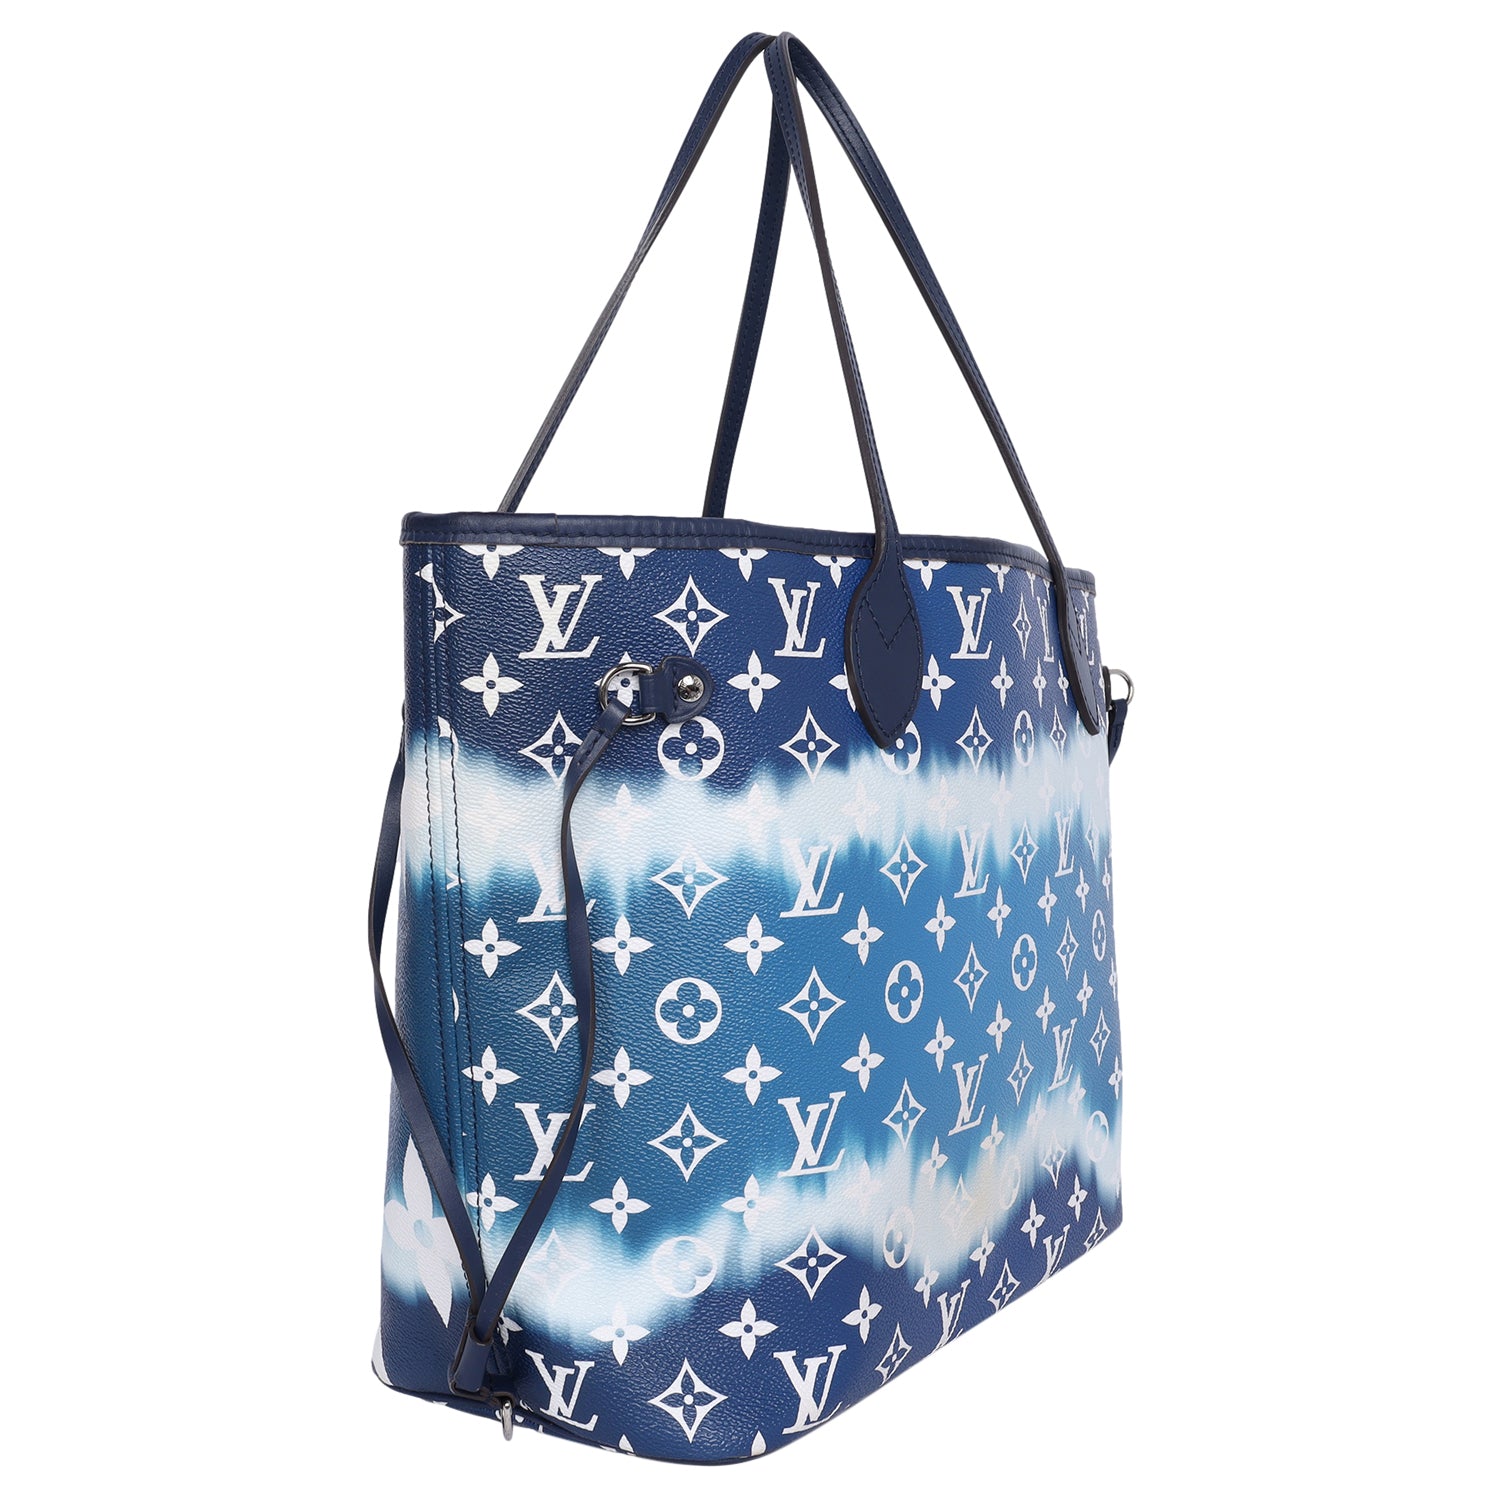 Louis Vuitton Escale Neverfull Bag